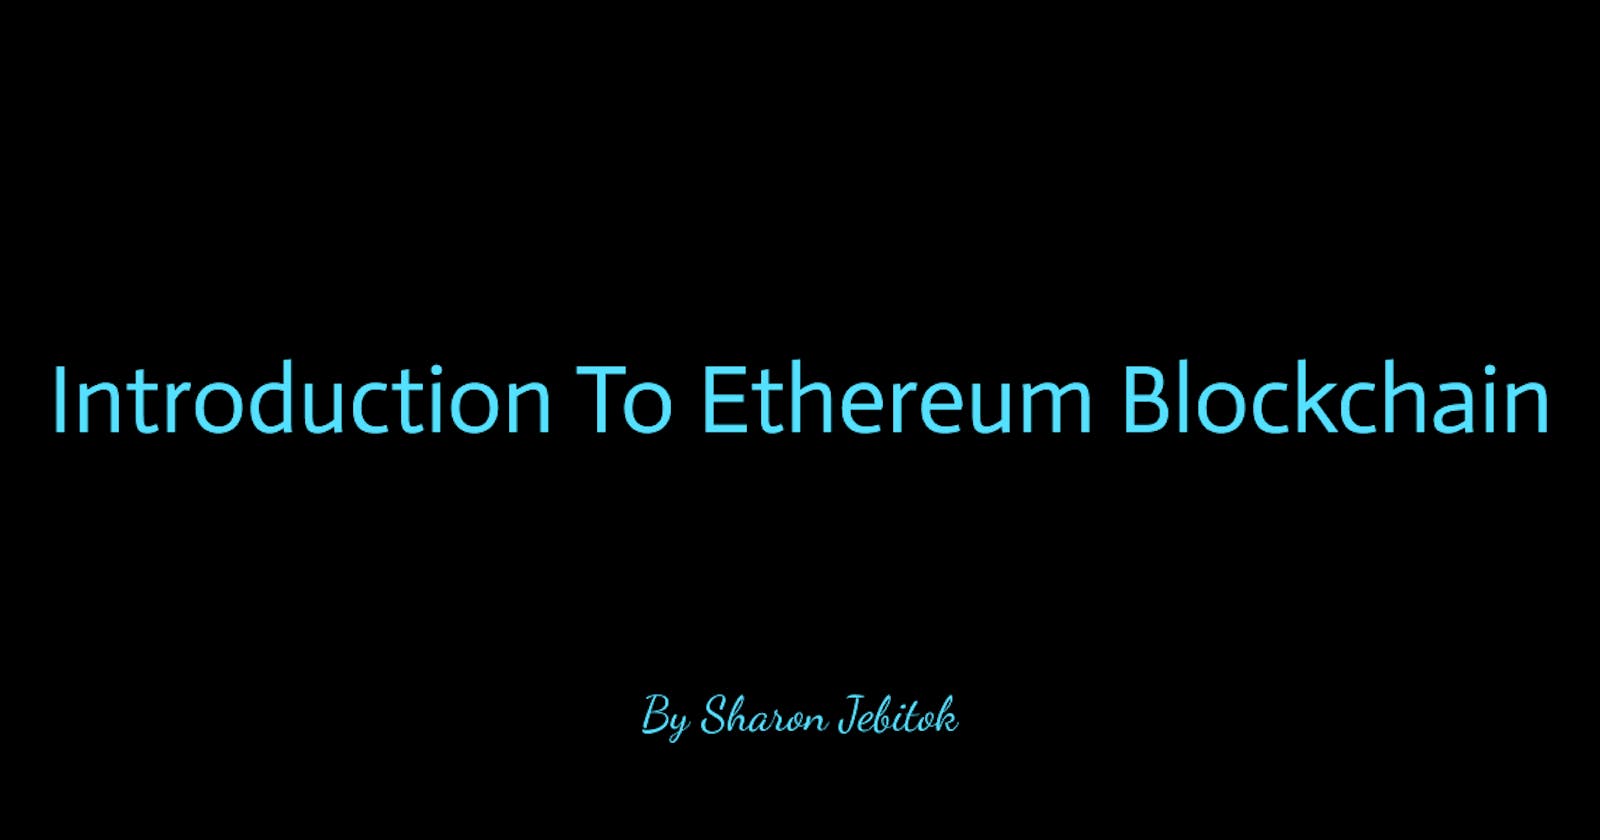 Introduction to Ethereum Blockchain